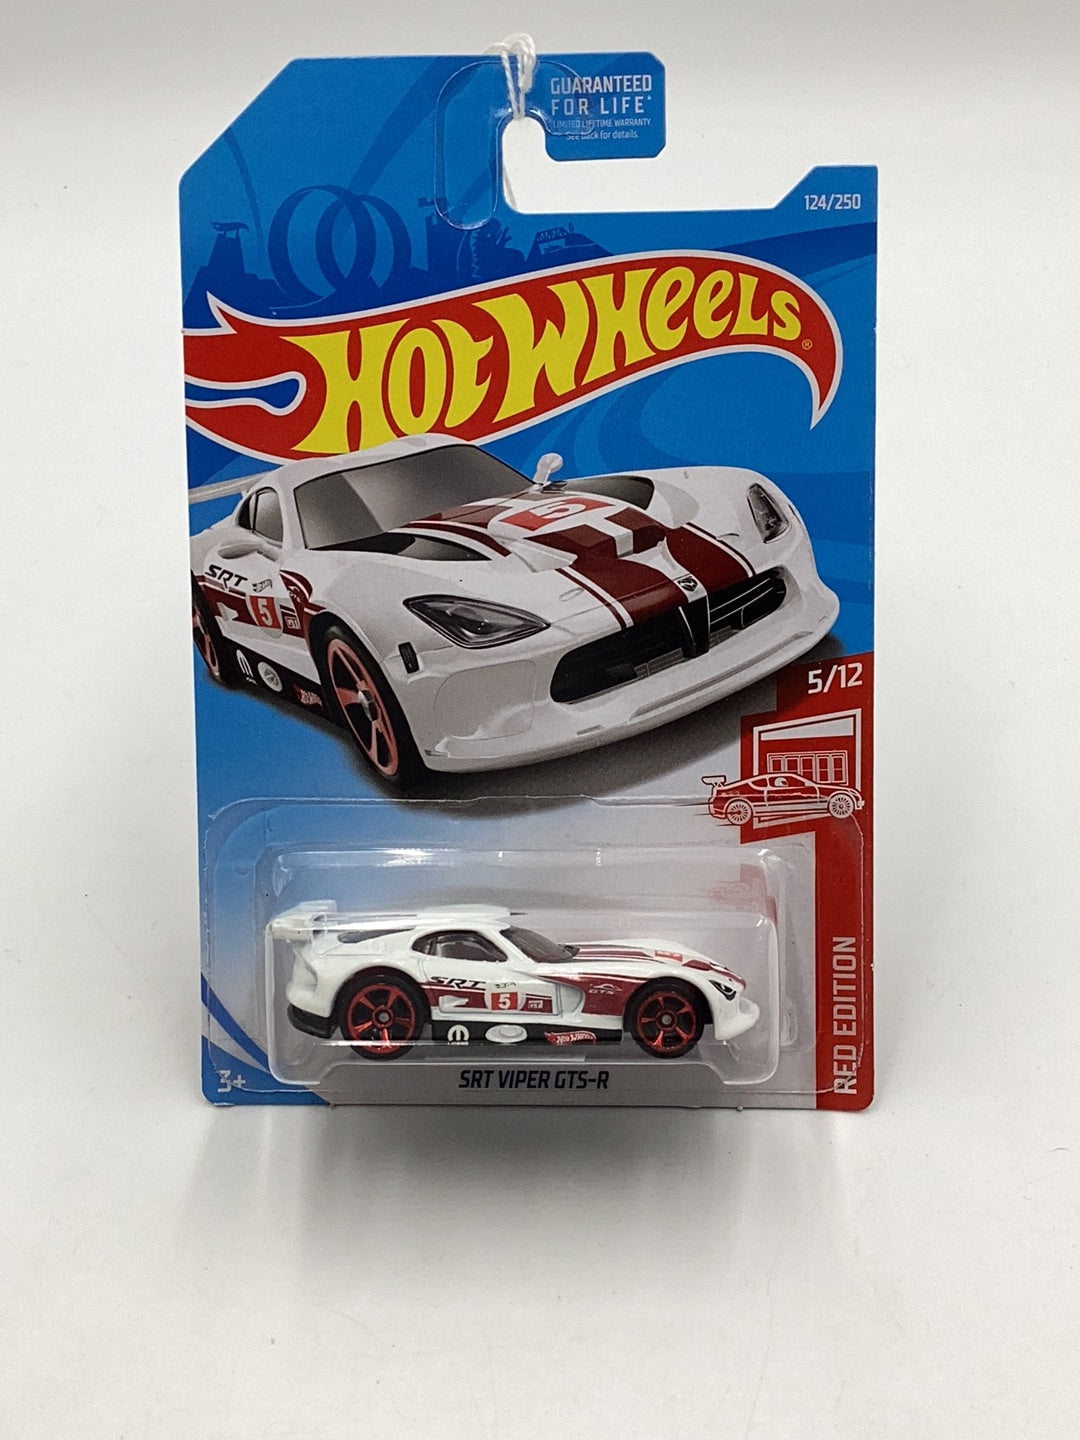 2019 Hot Wheels Red Edition SRT Viper GTS-R 124/250